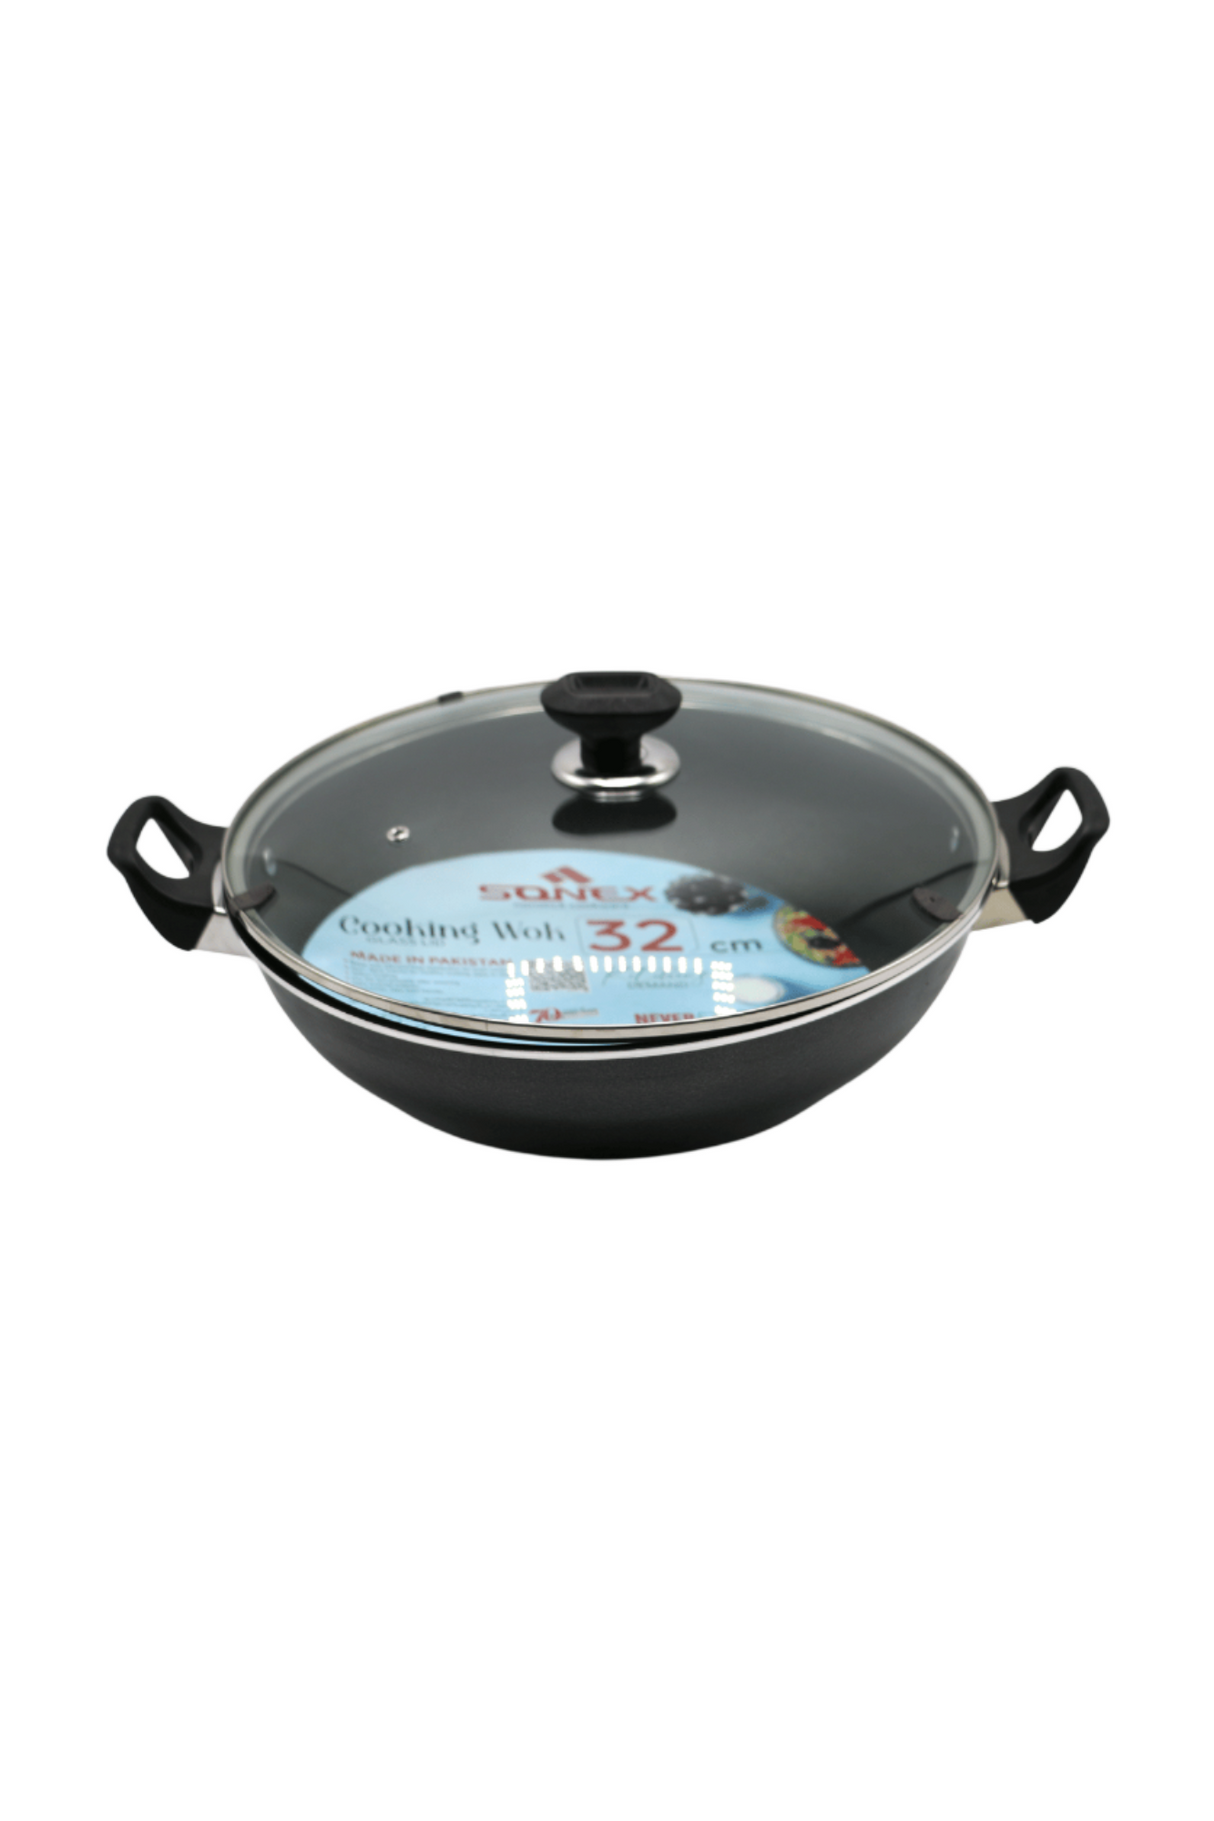 sonex ns cooking wok 32cm 50051